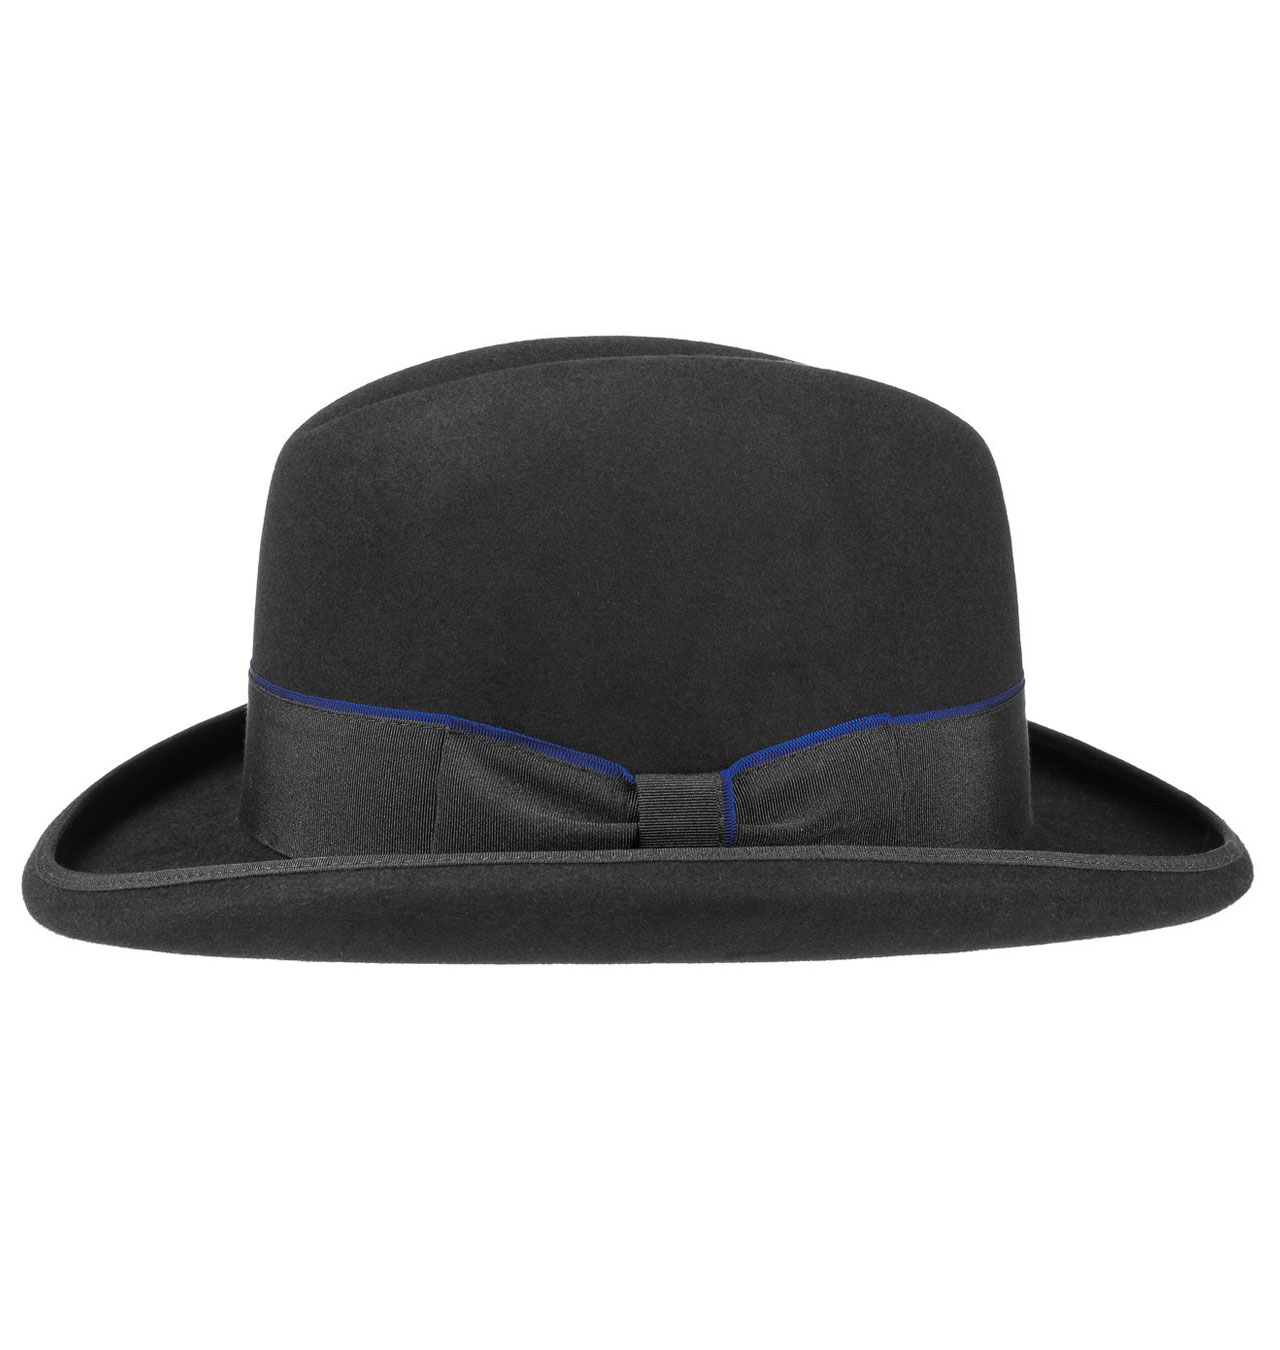 Stetson - Homburg Fur Felt Hat - Black